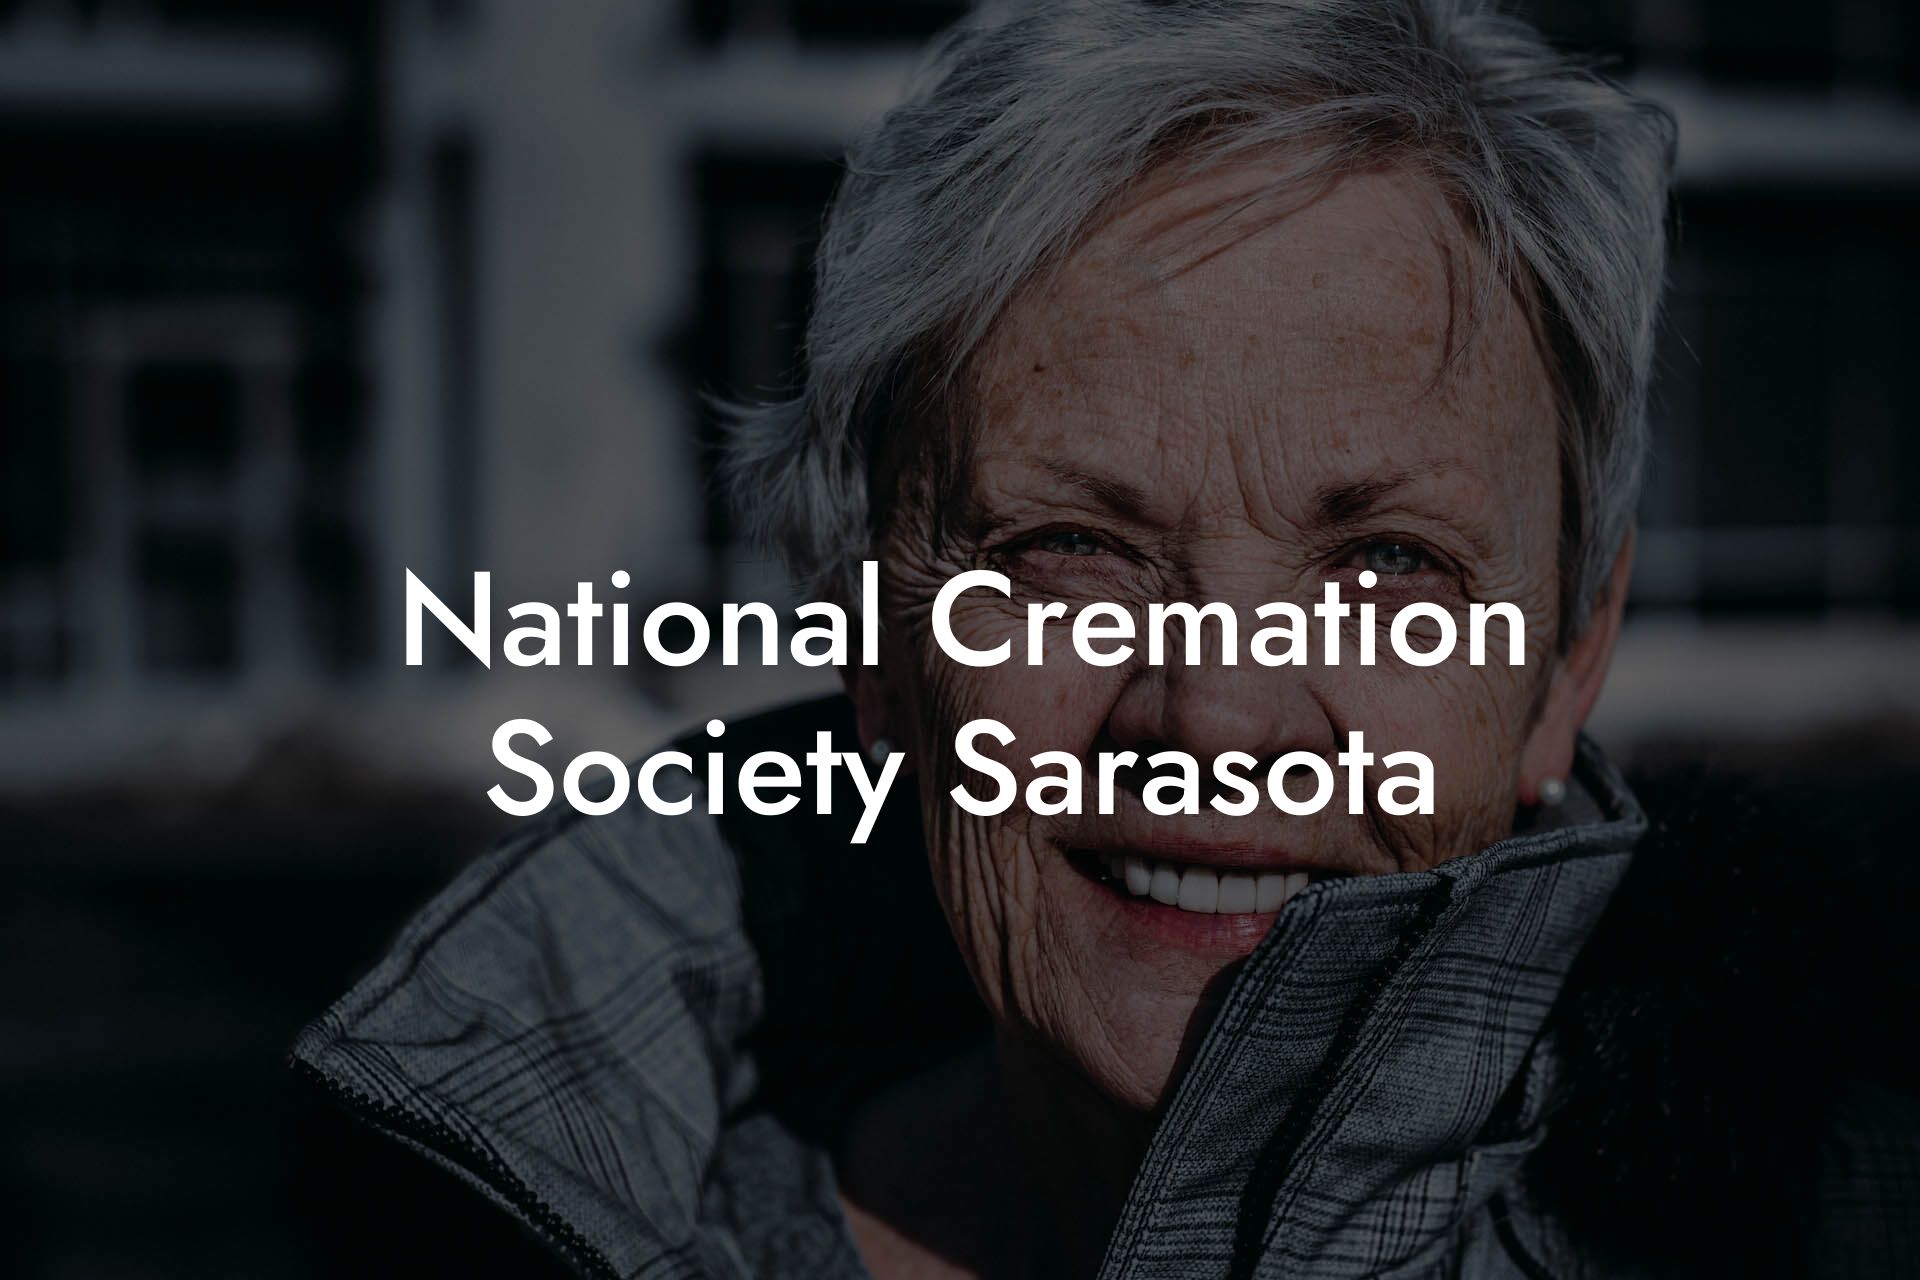 National Cremation Society Sarasota